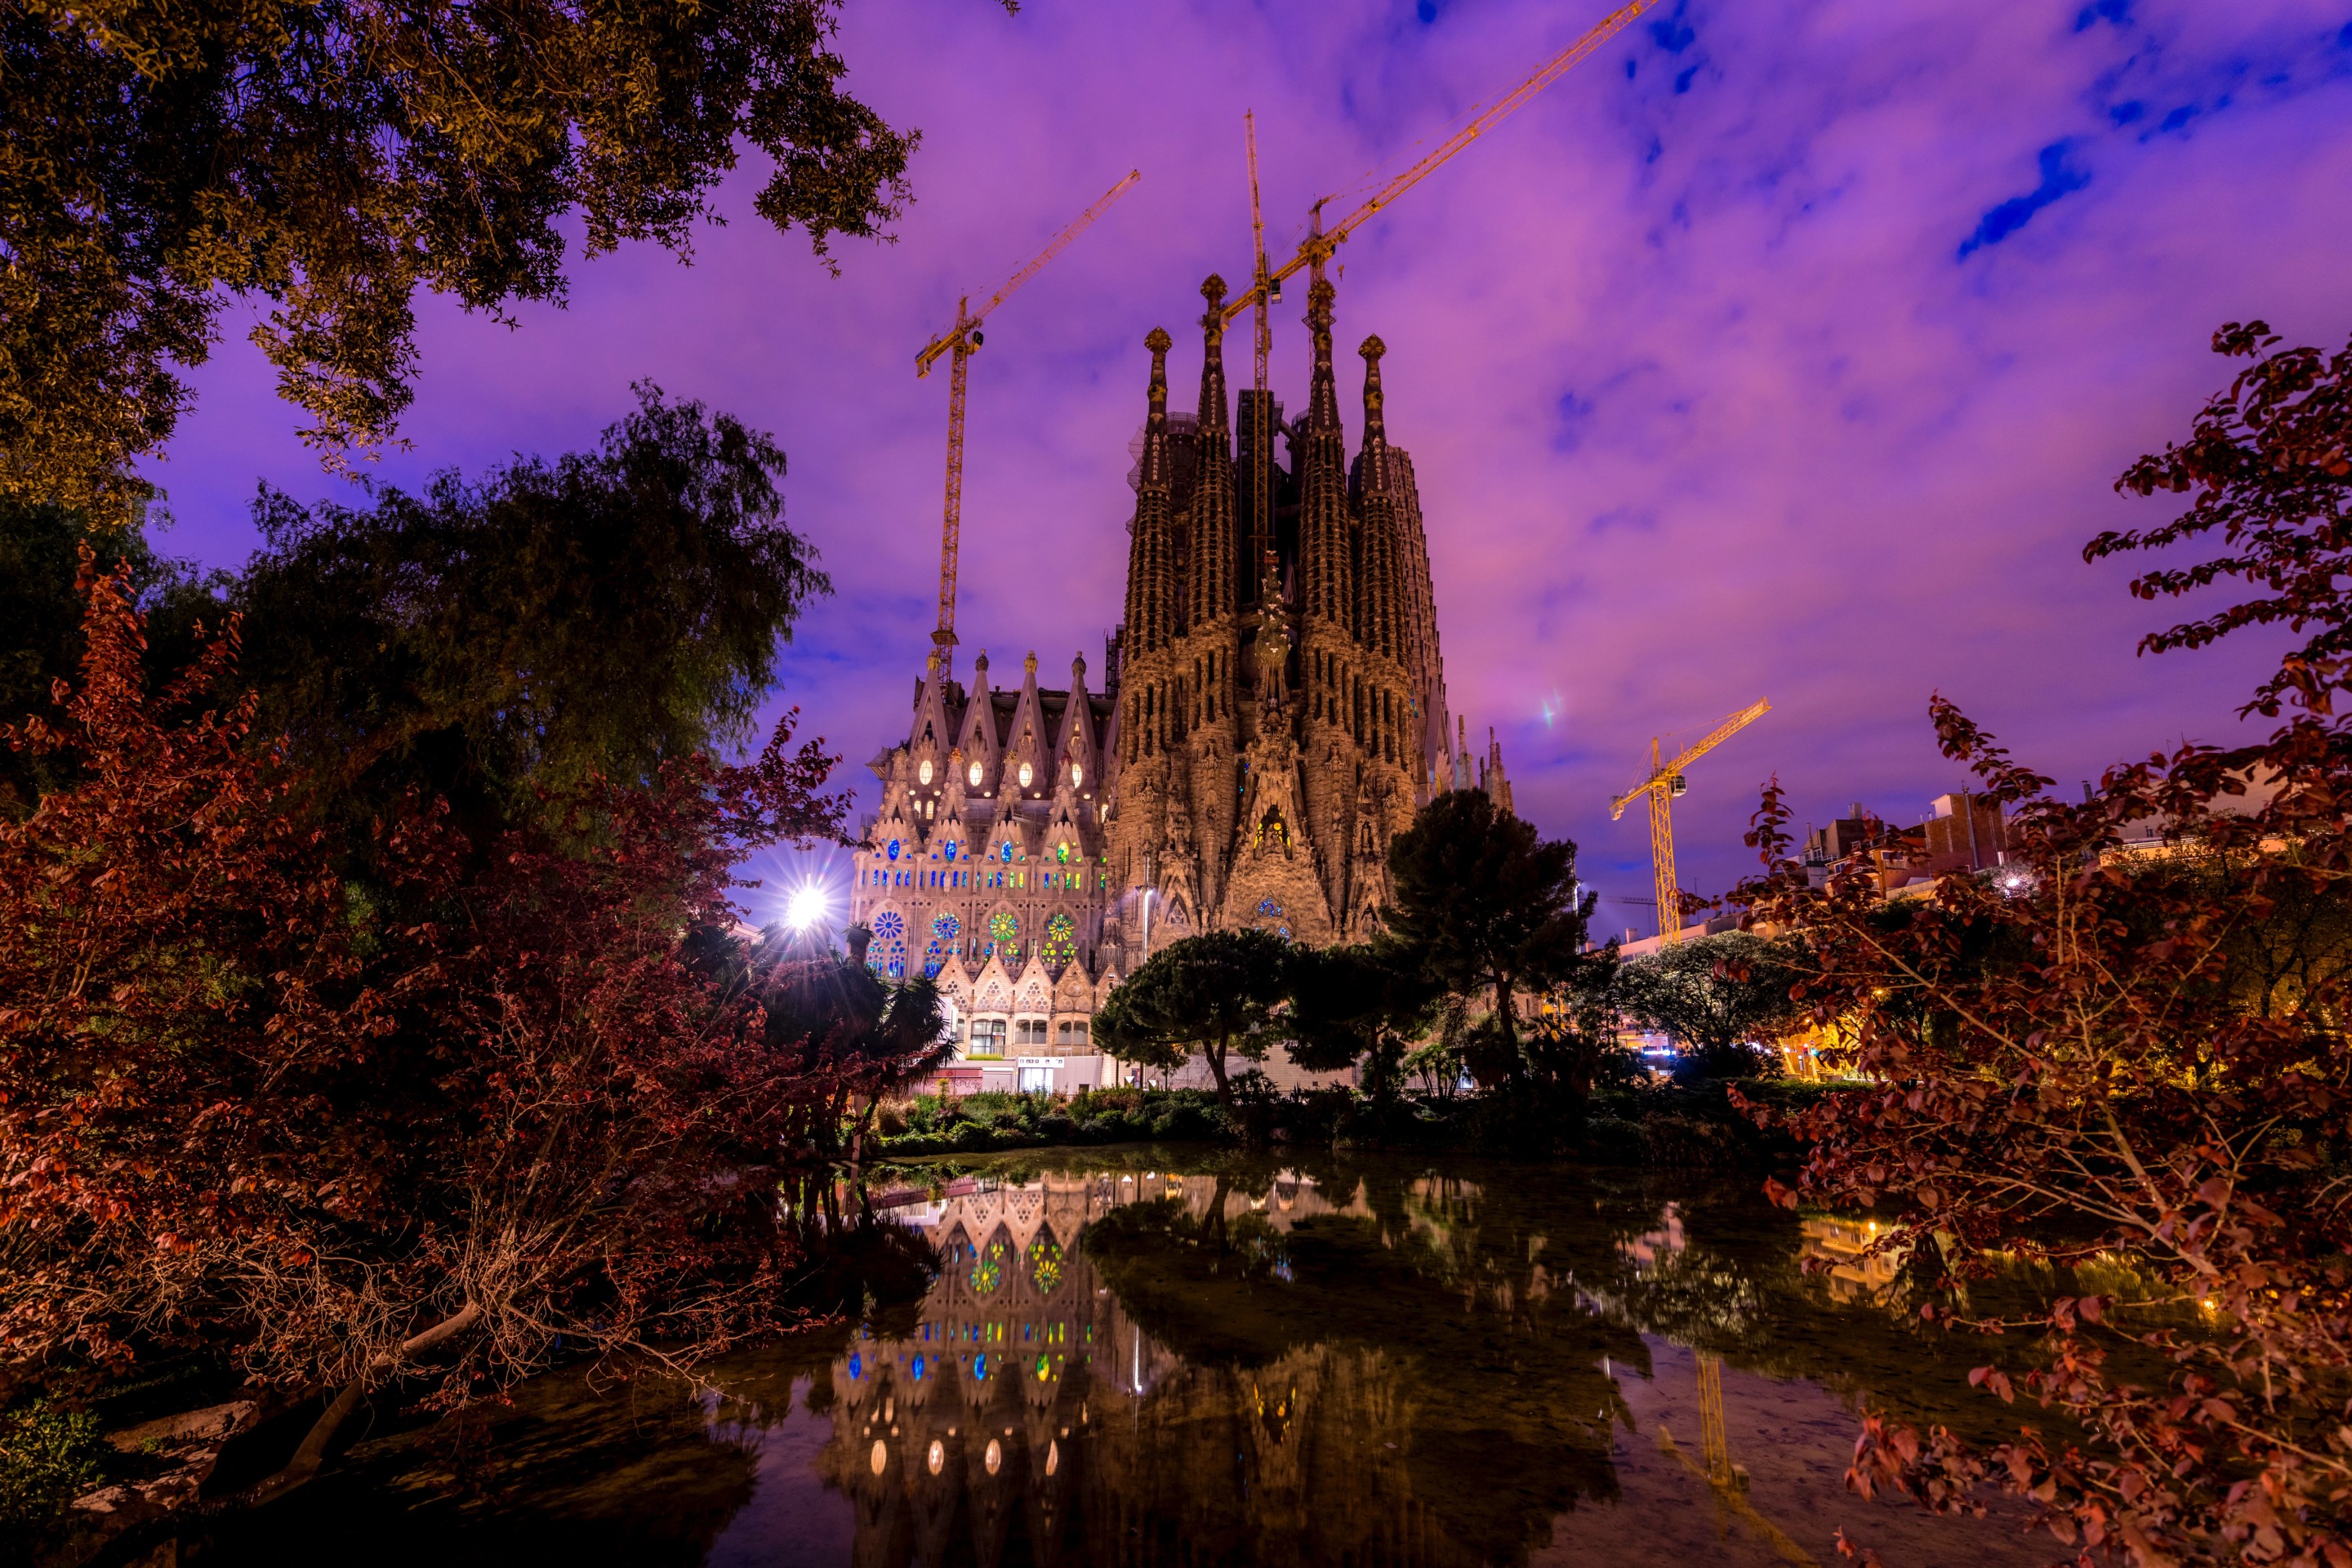 The Sagrada Família, a heavily decorated basilica, at night